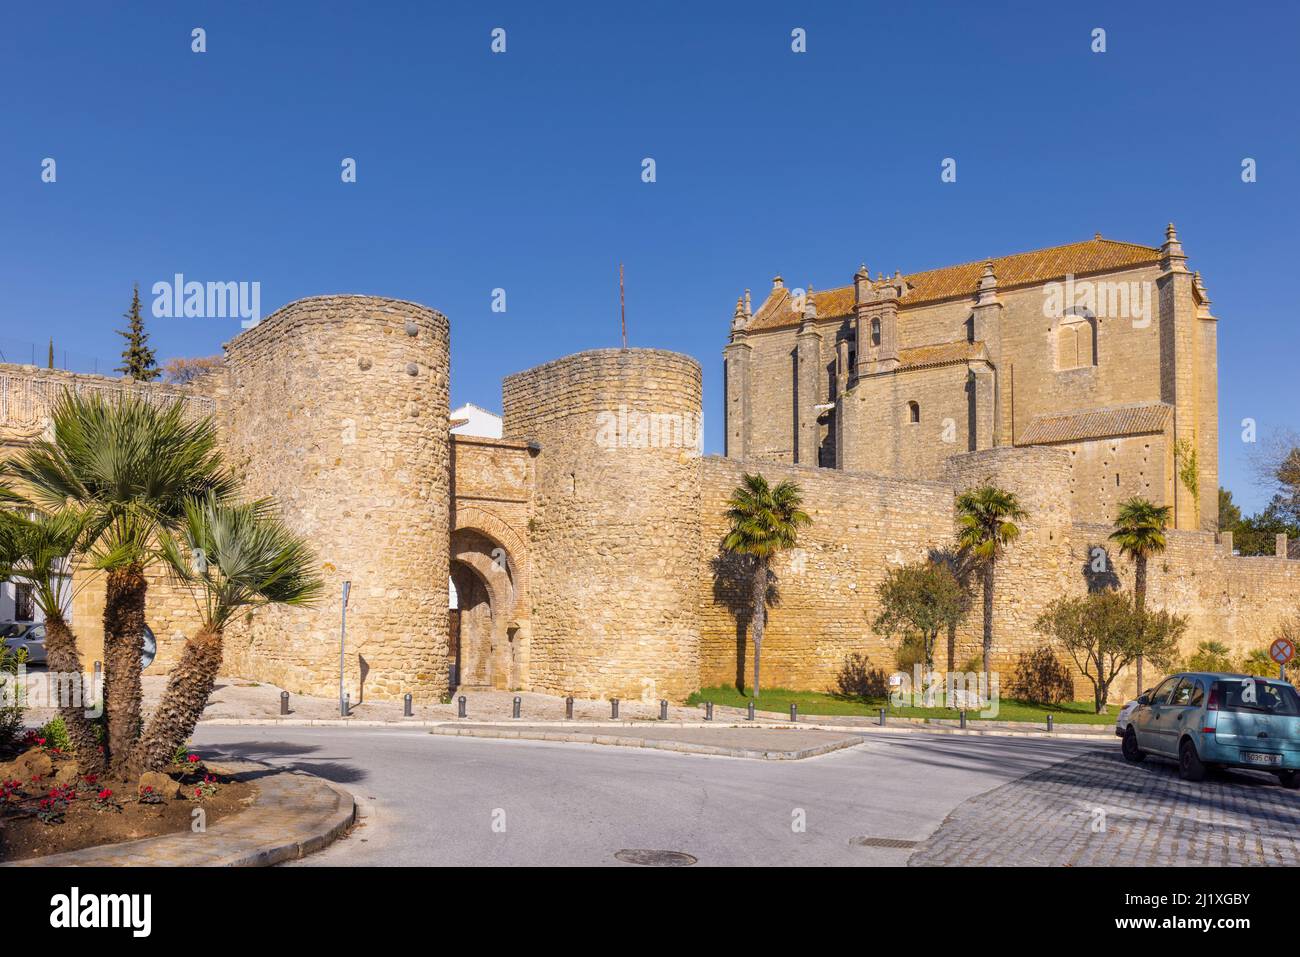 The 13th century Puerto de Almocabar, or Almocabar Gate and city walls, Ronda, Malaga Province, Andalusia, southern Spain. Puerto de Almocabar comes f Stock Photo